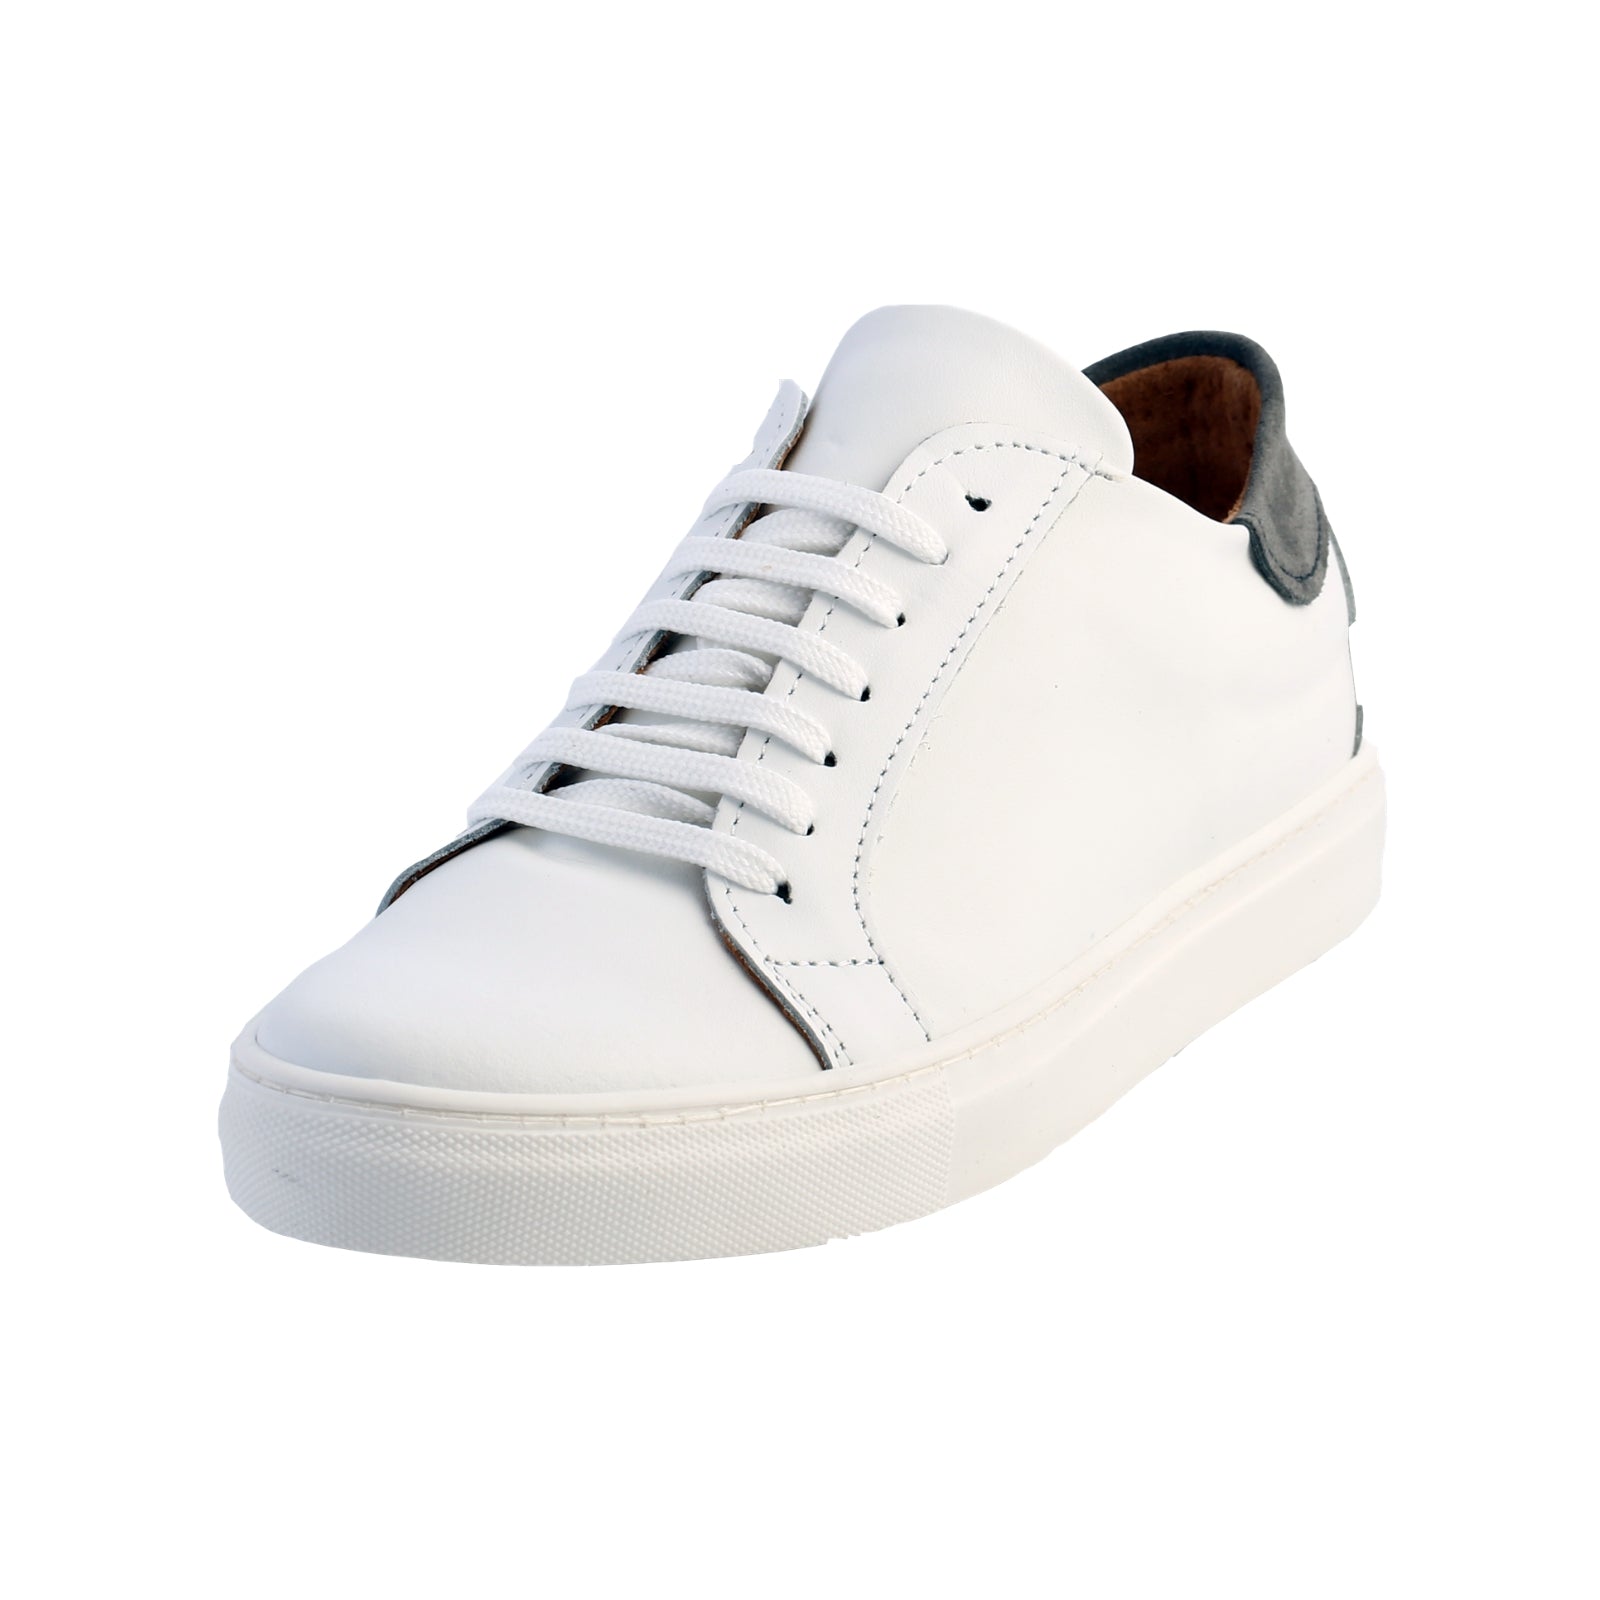 bianca pelle scarpe scarpe shopping aa4f7 98589